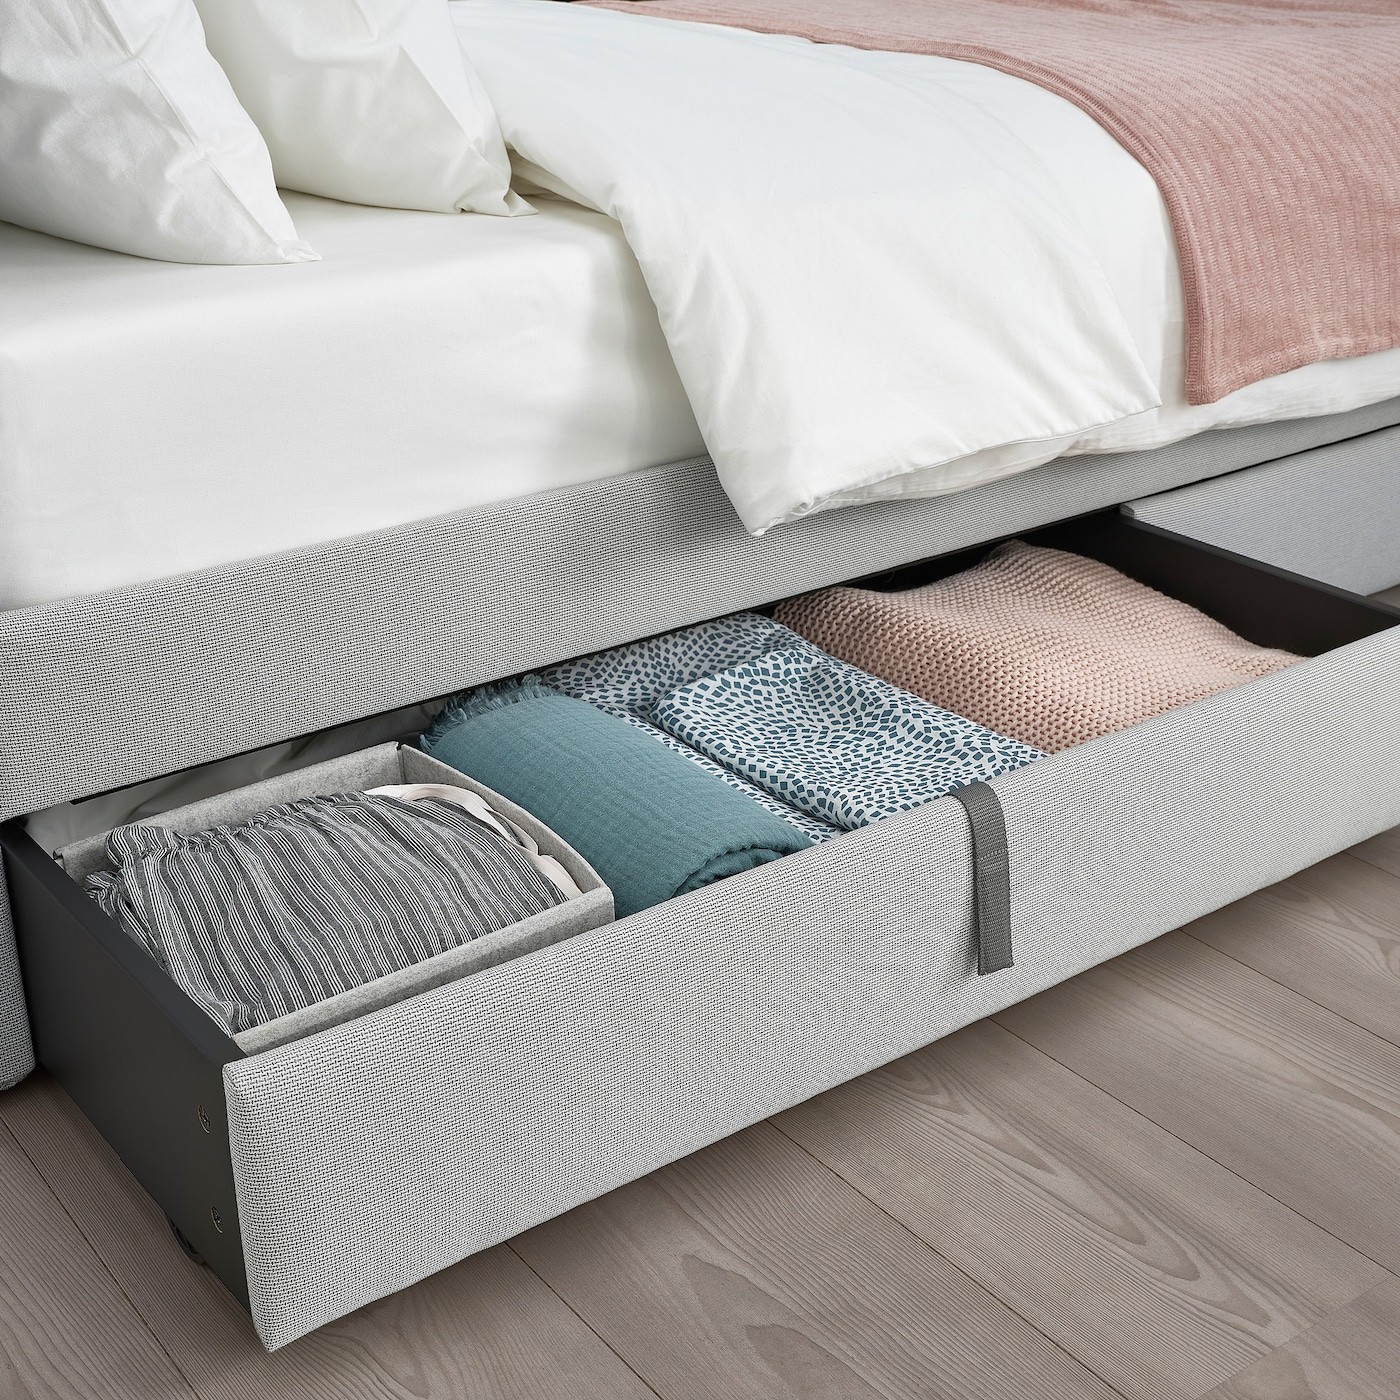 GLADSTAD Upholstered bed storage box